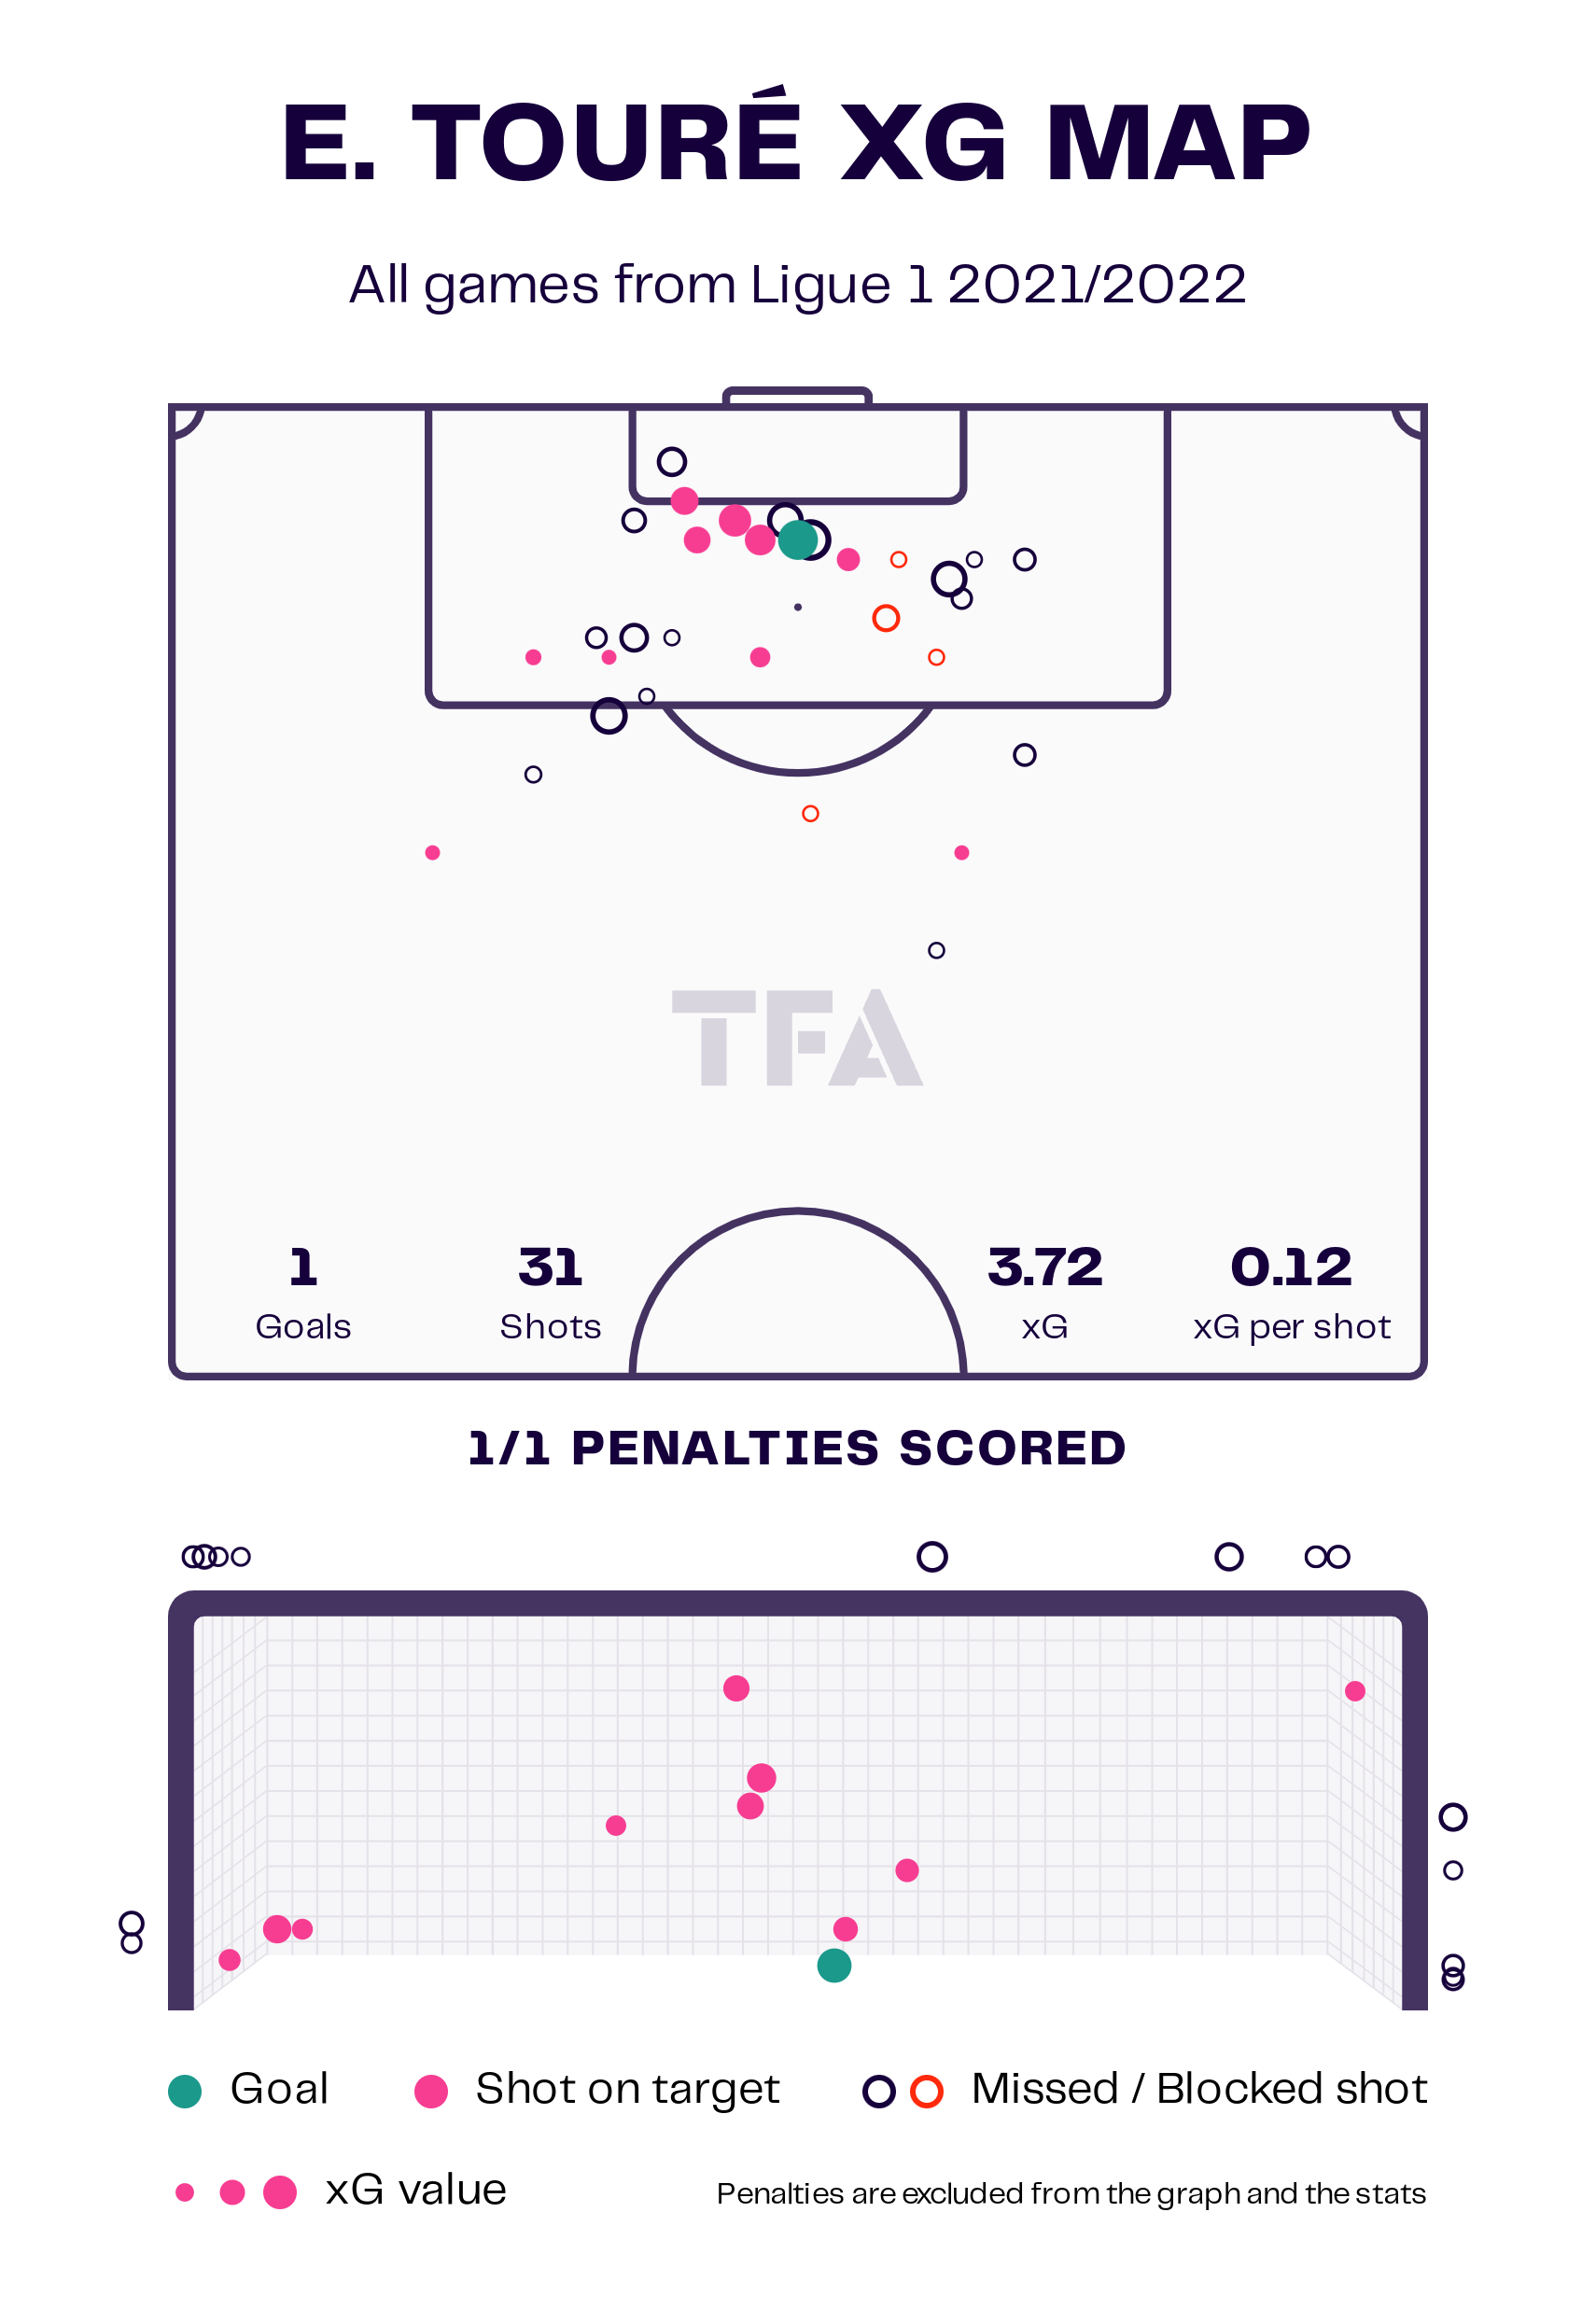 Bilal Toure - Almeria: La Liga 2022/23 data, statistics, analysis and scouting report